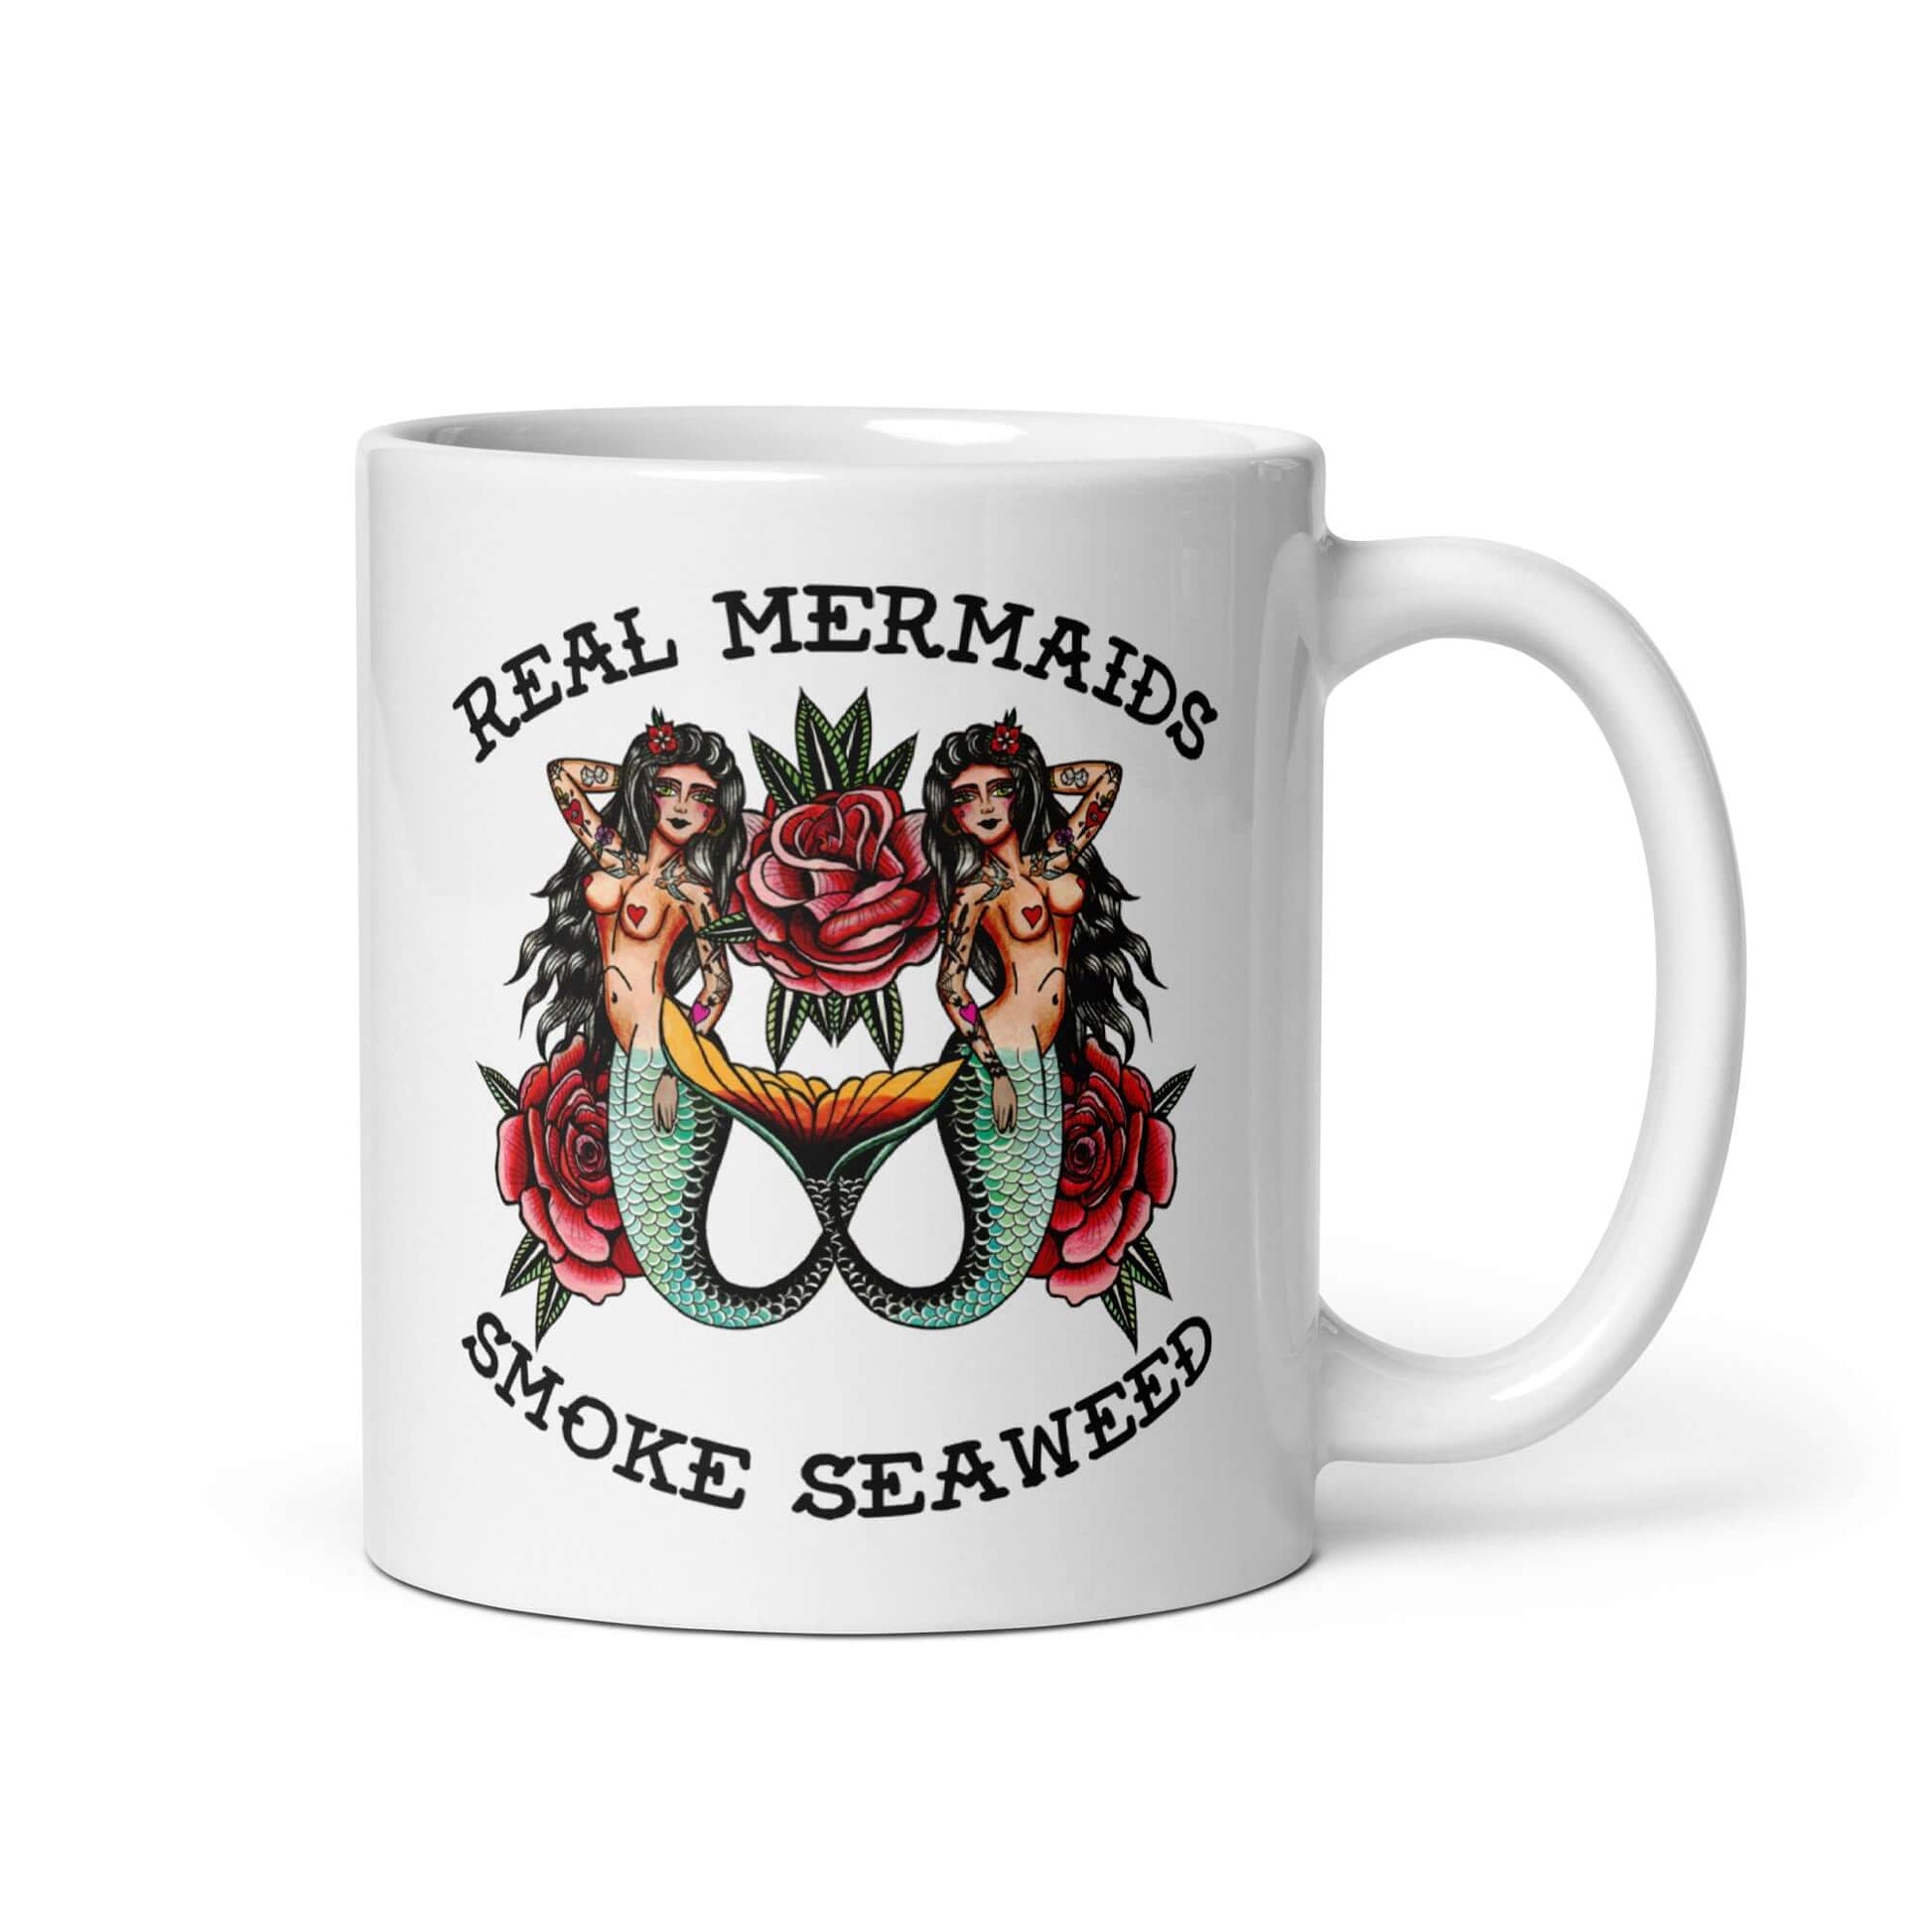 White ceramic mug with image of 2 mermaids and the words Real mermaids smoke seaweed printed on both sides.